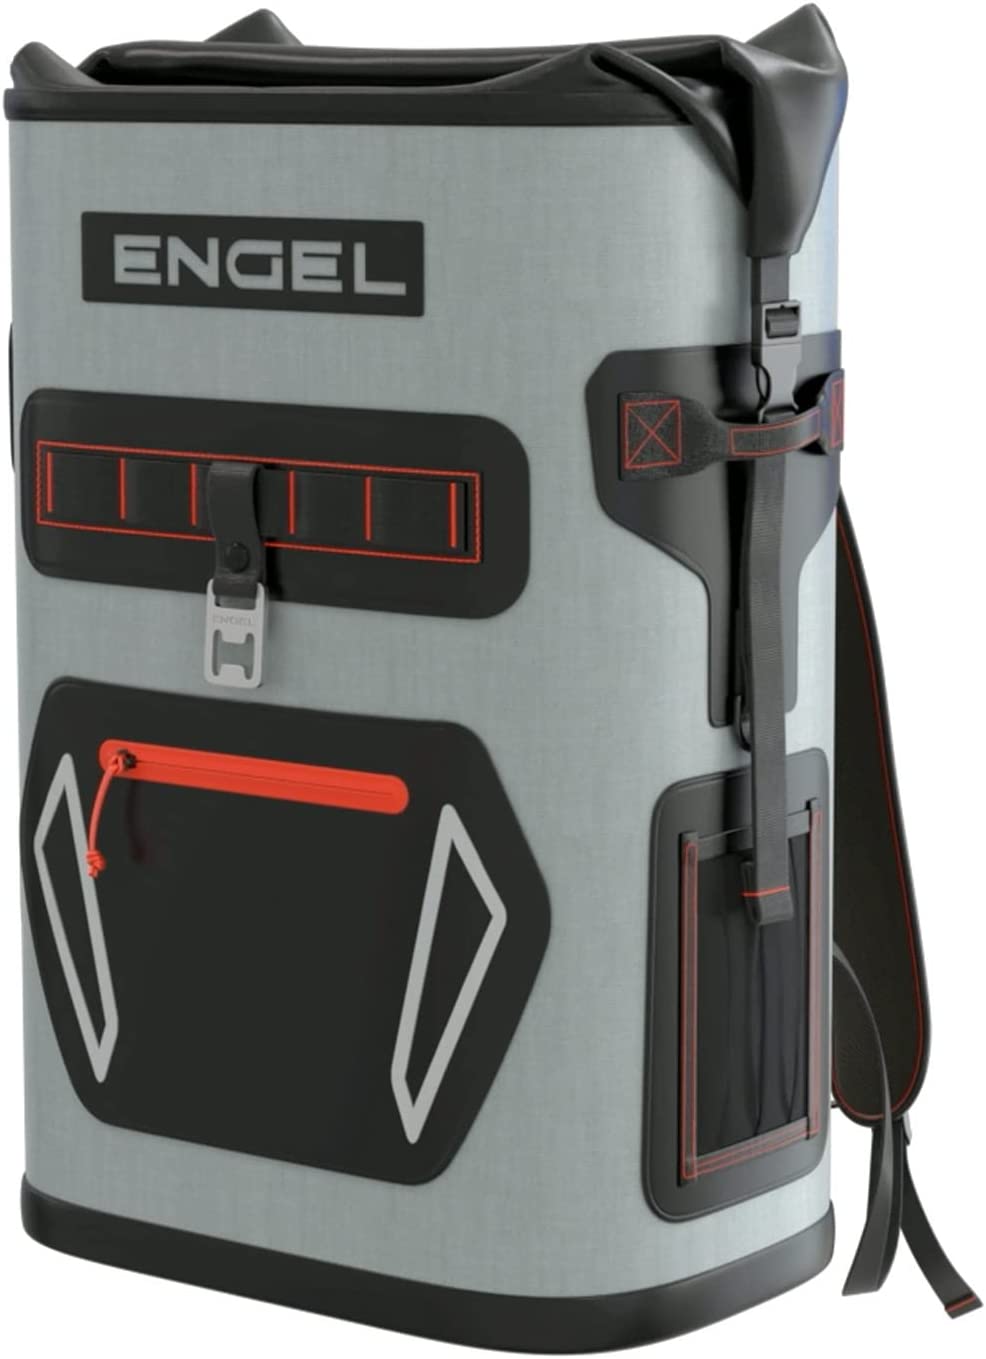 Engel Roll Top High Performance backpack cooler